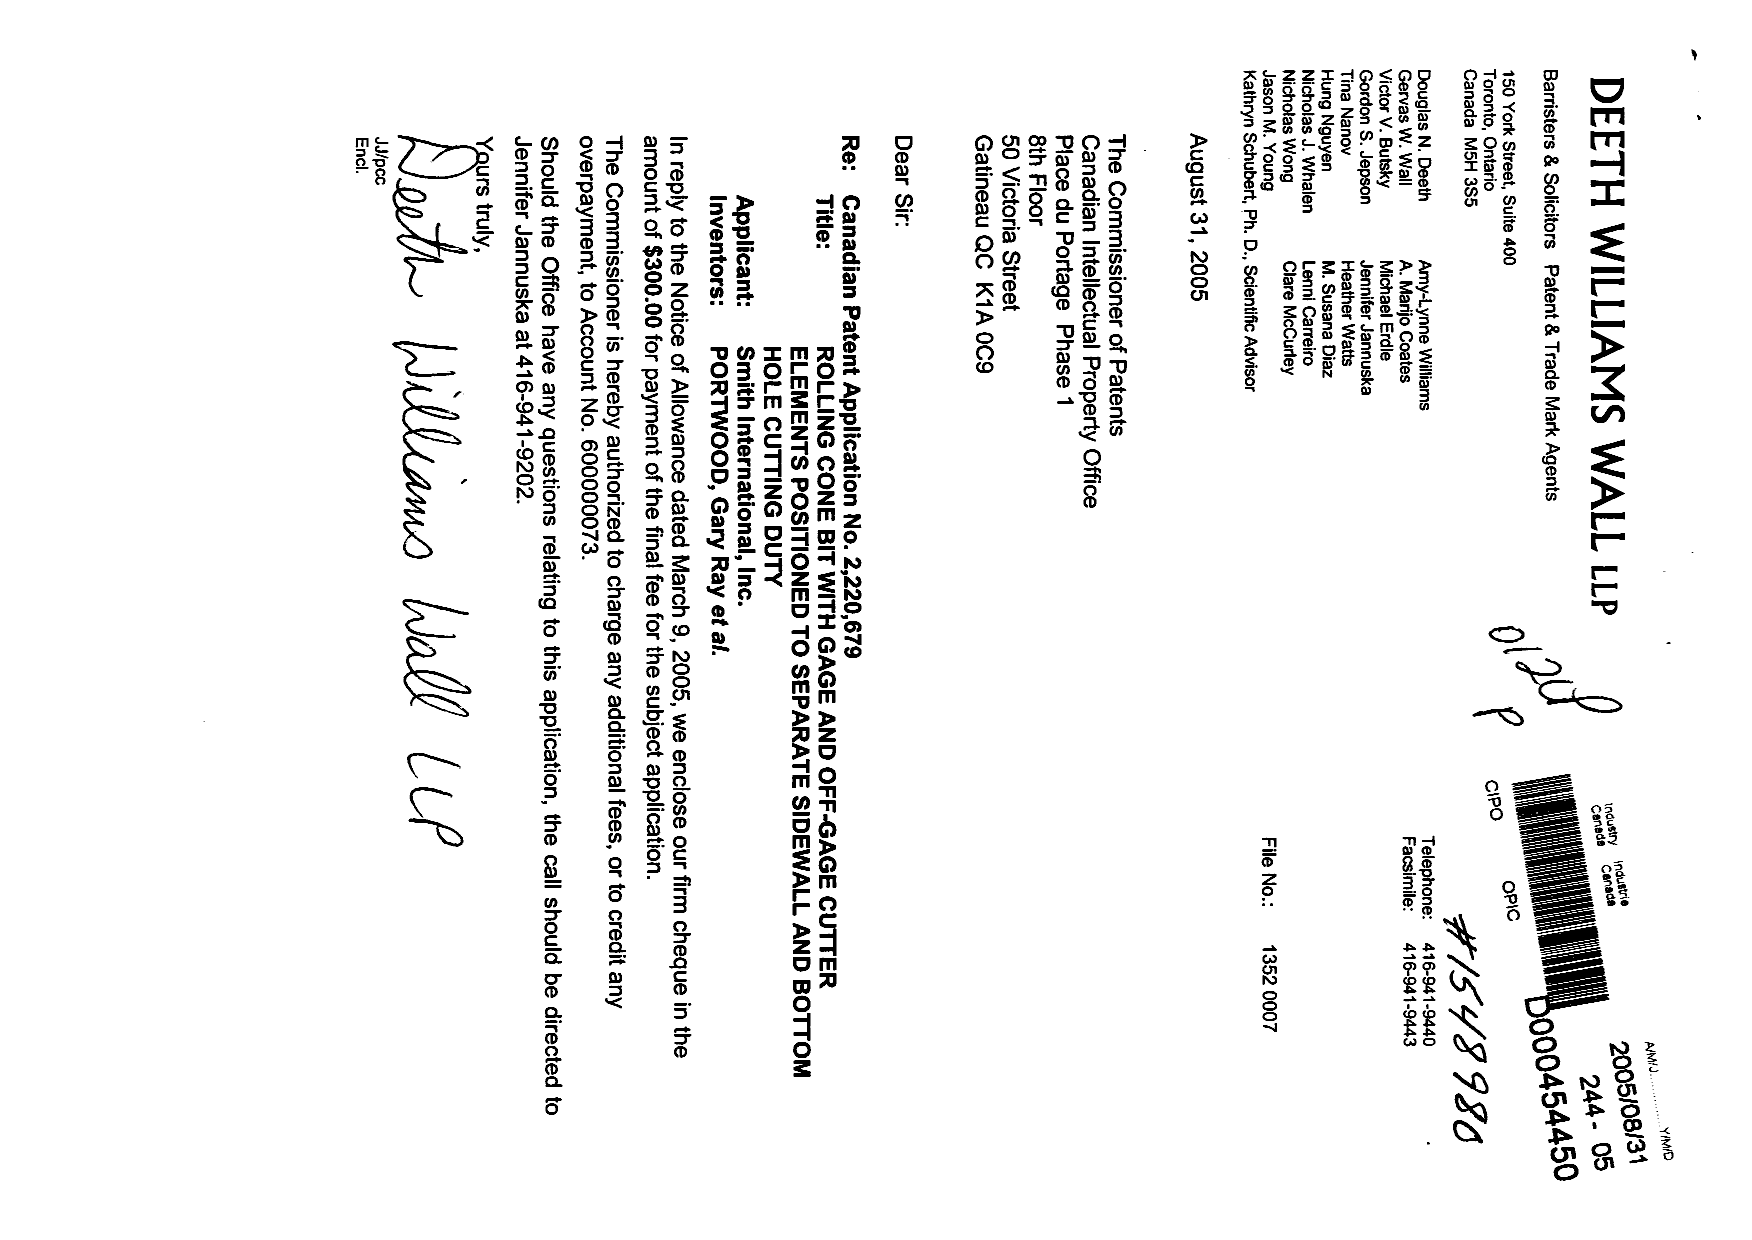 Canadian Patent Document 2220679. Correspondence 20050831. Image 1 of 1